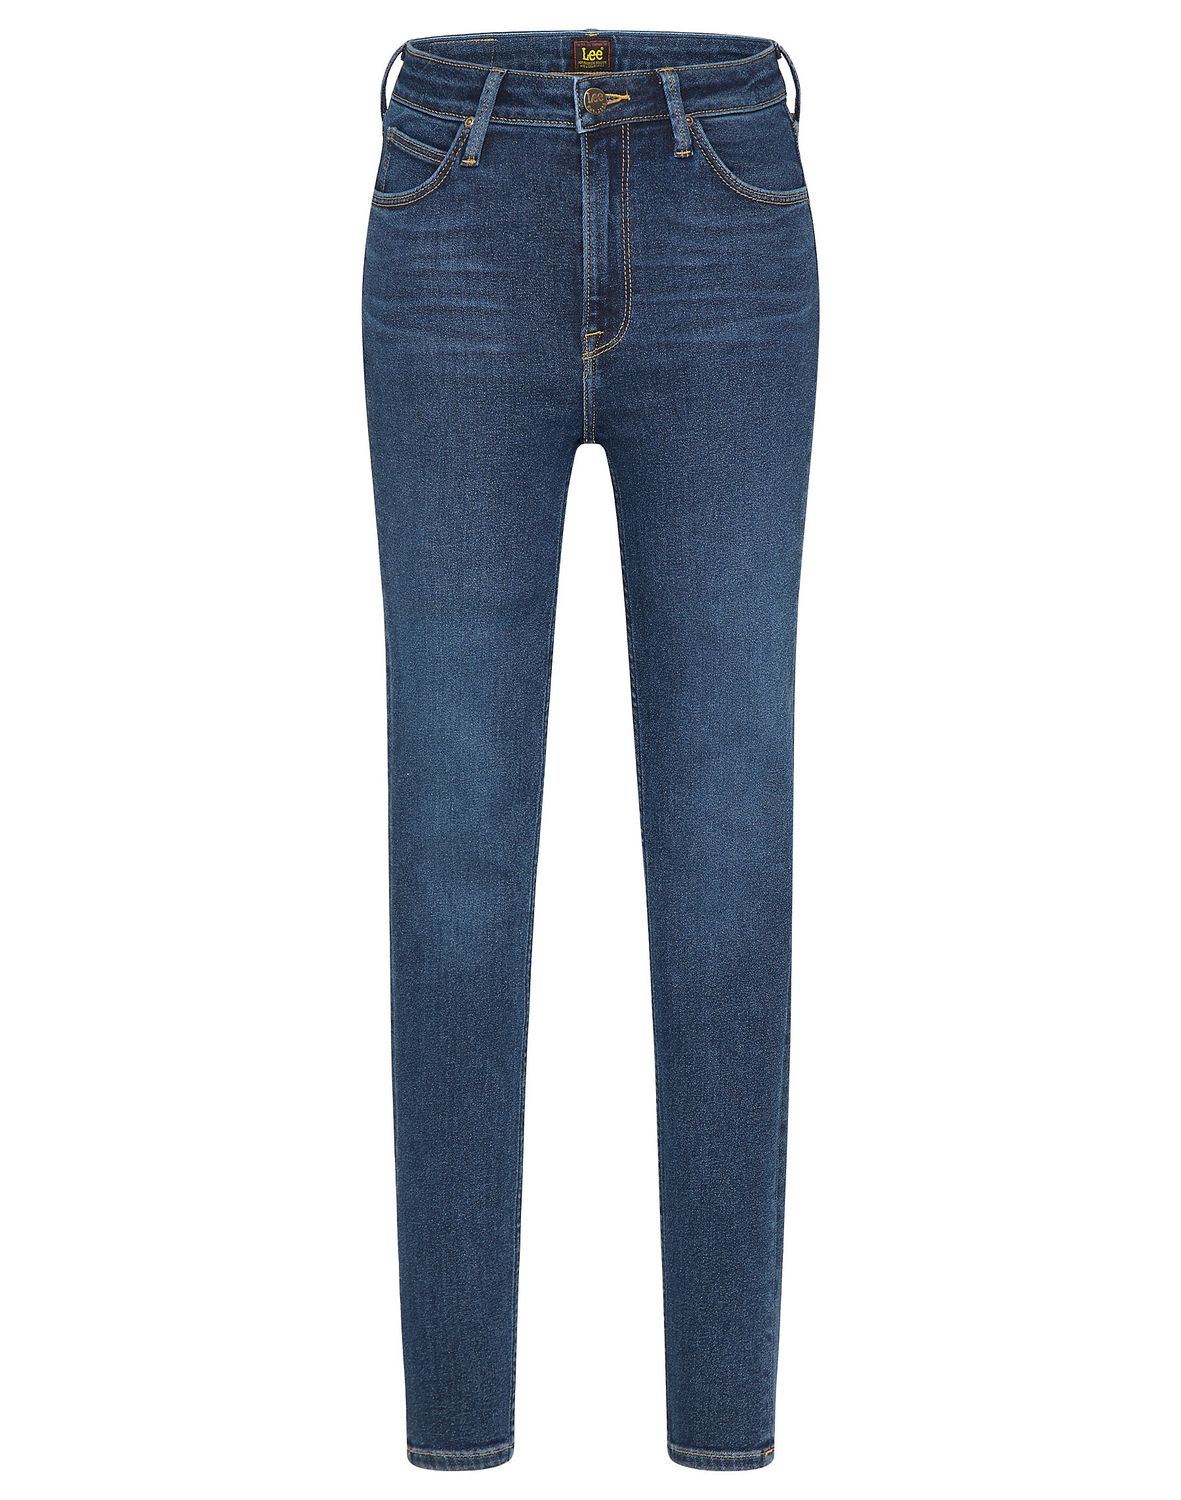 Lee Damen Jeans Ivy - Skinny Fit - Blau - Worn Willow